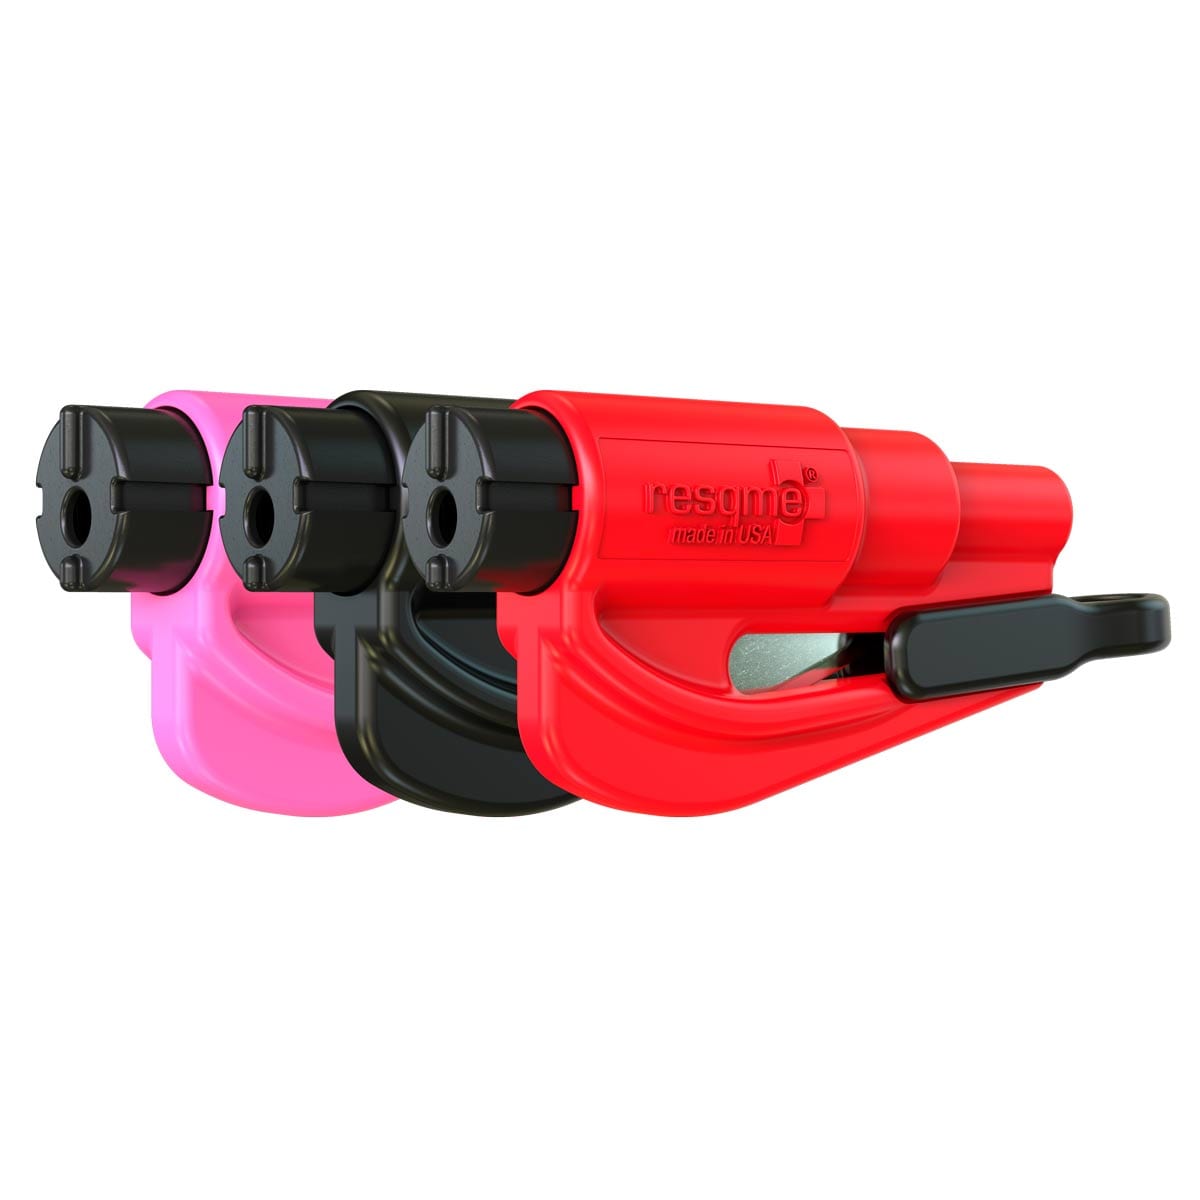 resqme® Car Escape Tool, Seatbelt Cutter / Window Breaker - Pack of 3 Black, Pink & Red